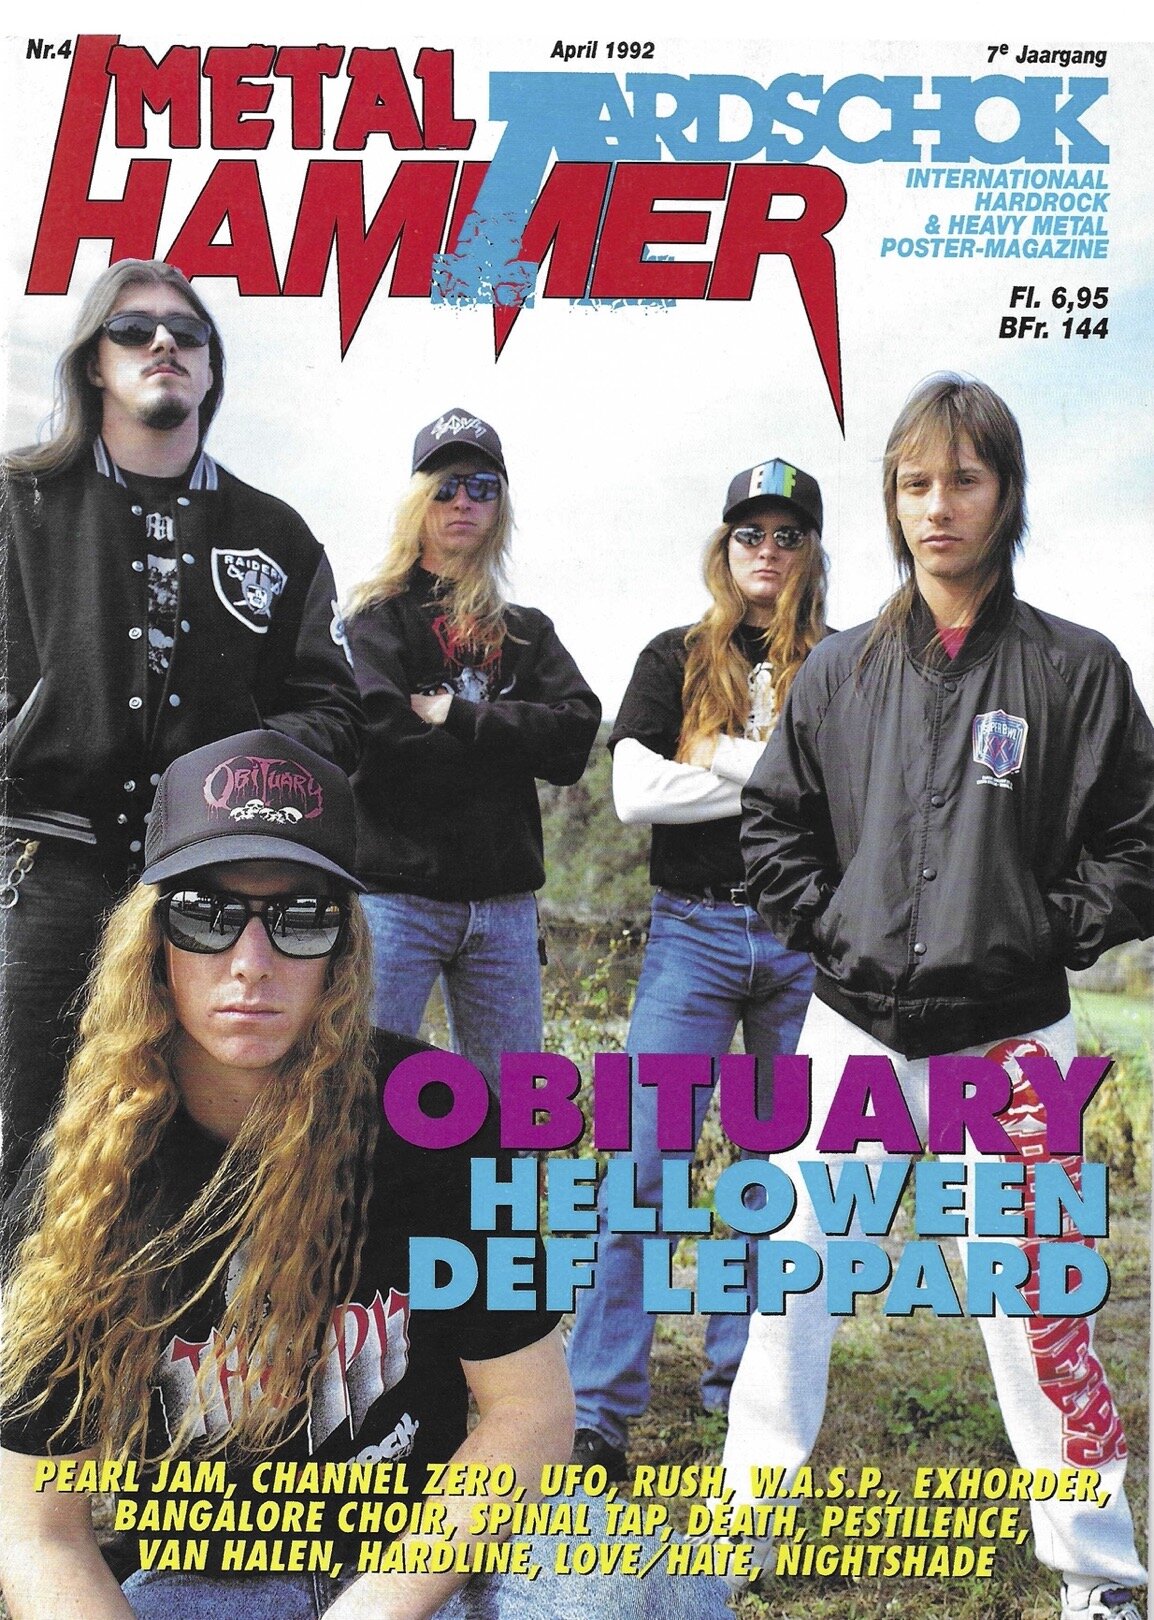 Nighsthade interview - Aardschok Metal Hammer, April 1992-cover.jpg